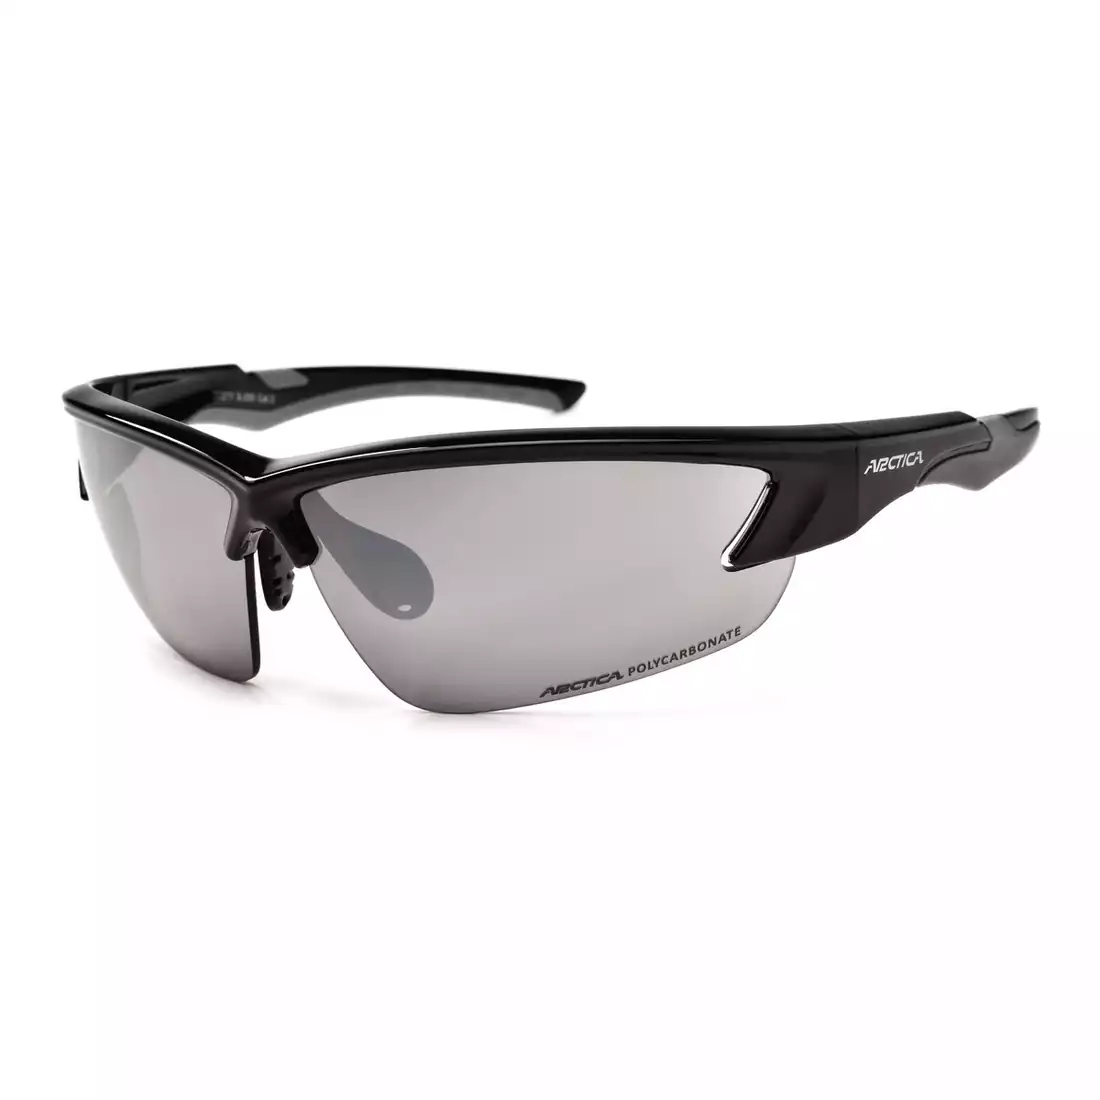 ARCTICA okulary sportowe, S 255